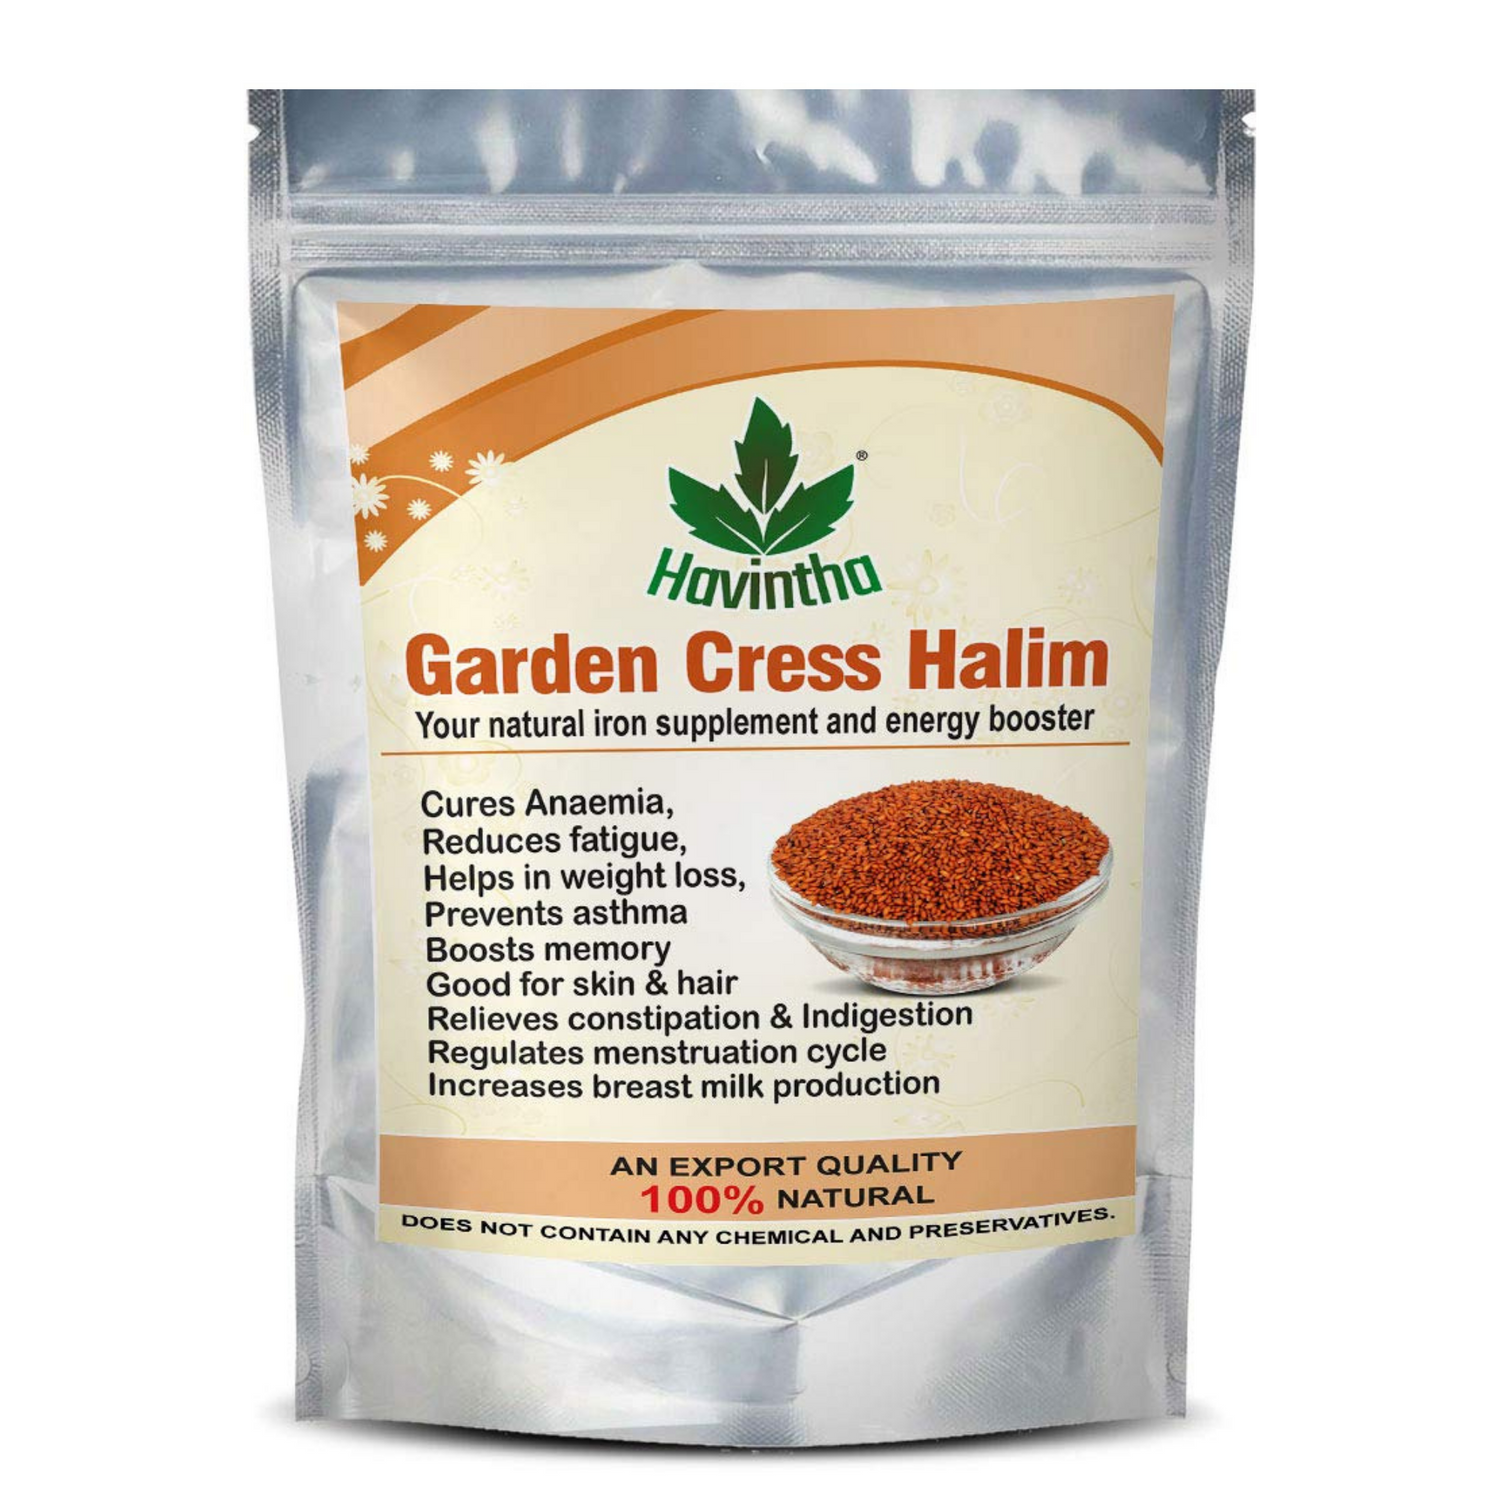 Havintha garden cress halim for asthma indigestion improves skin hair hemoglobin - 227 grams